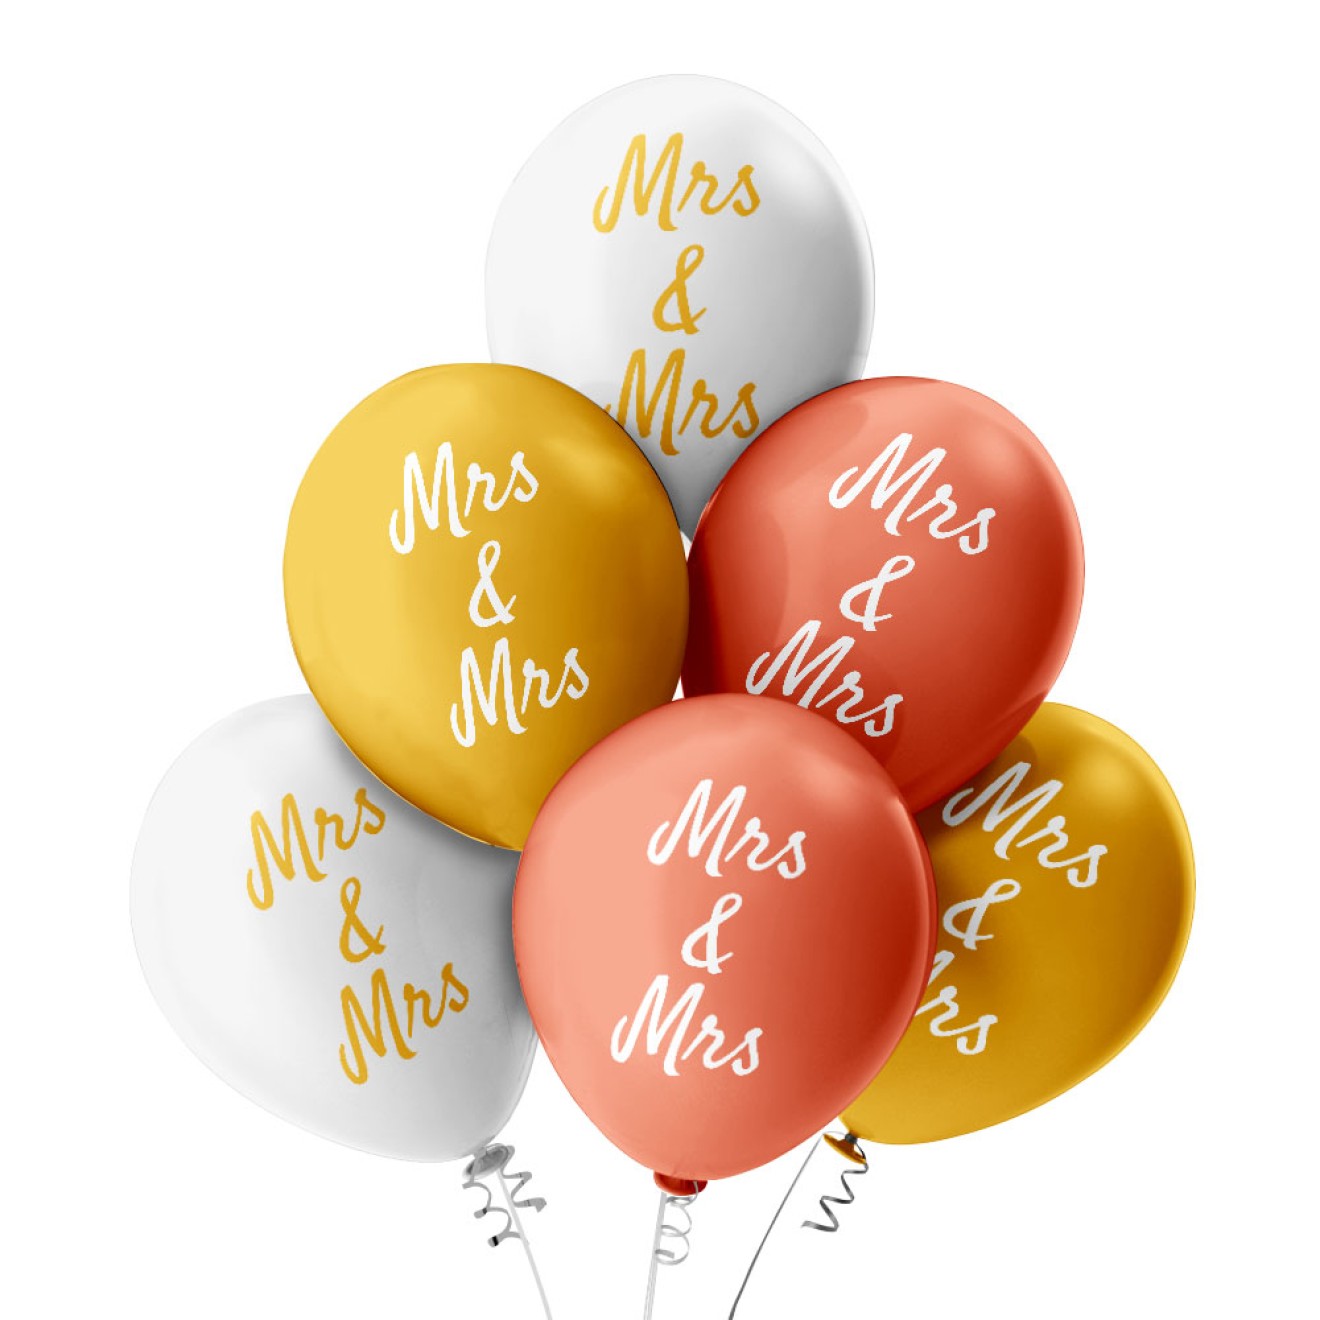 6 Luftballons Mrs & Mrs - Freie Farbauswahl